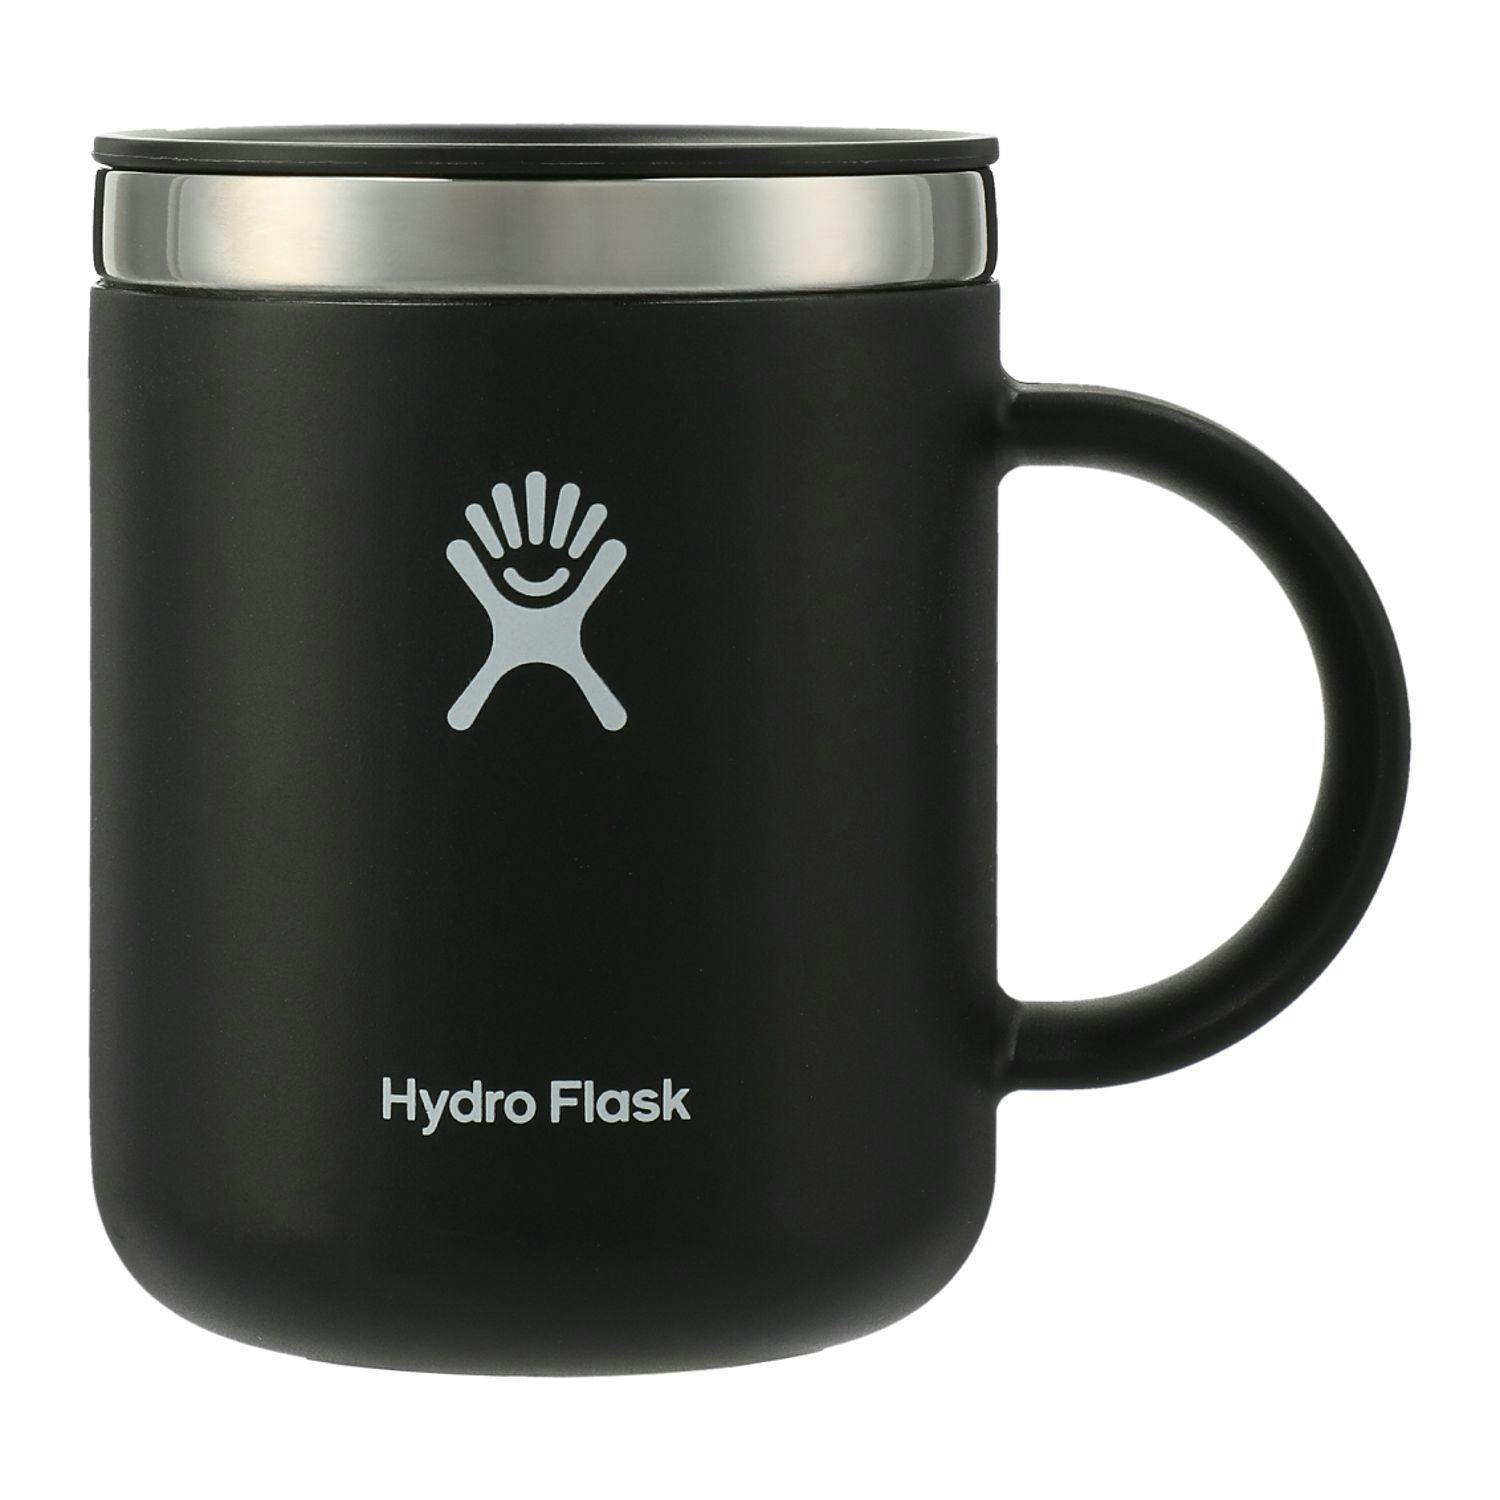 Hydro Flask® Coffee Mug 12oz - additional Image 1